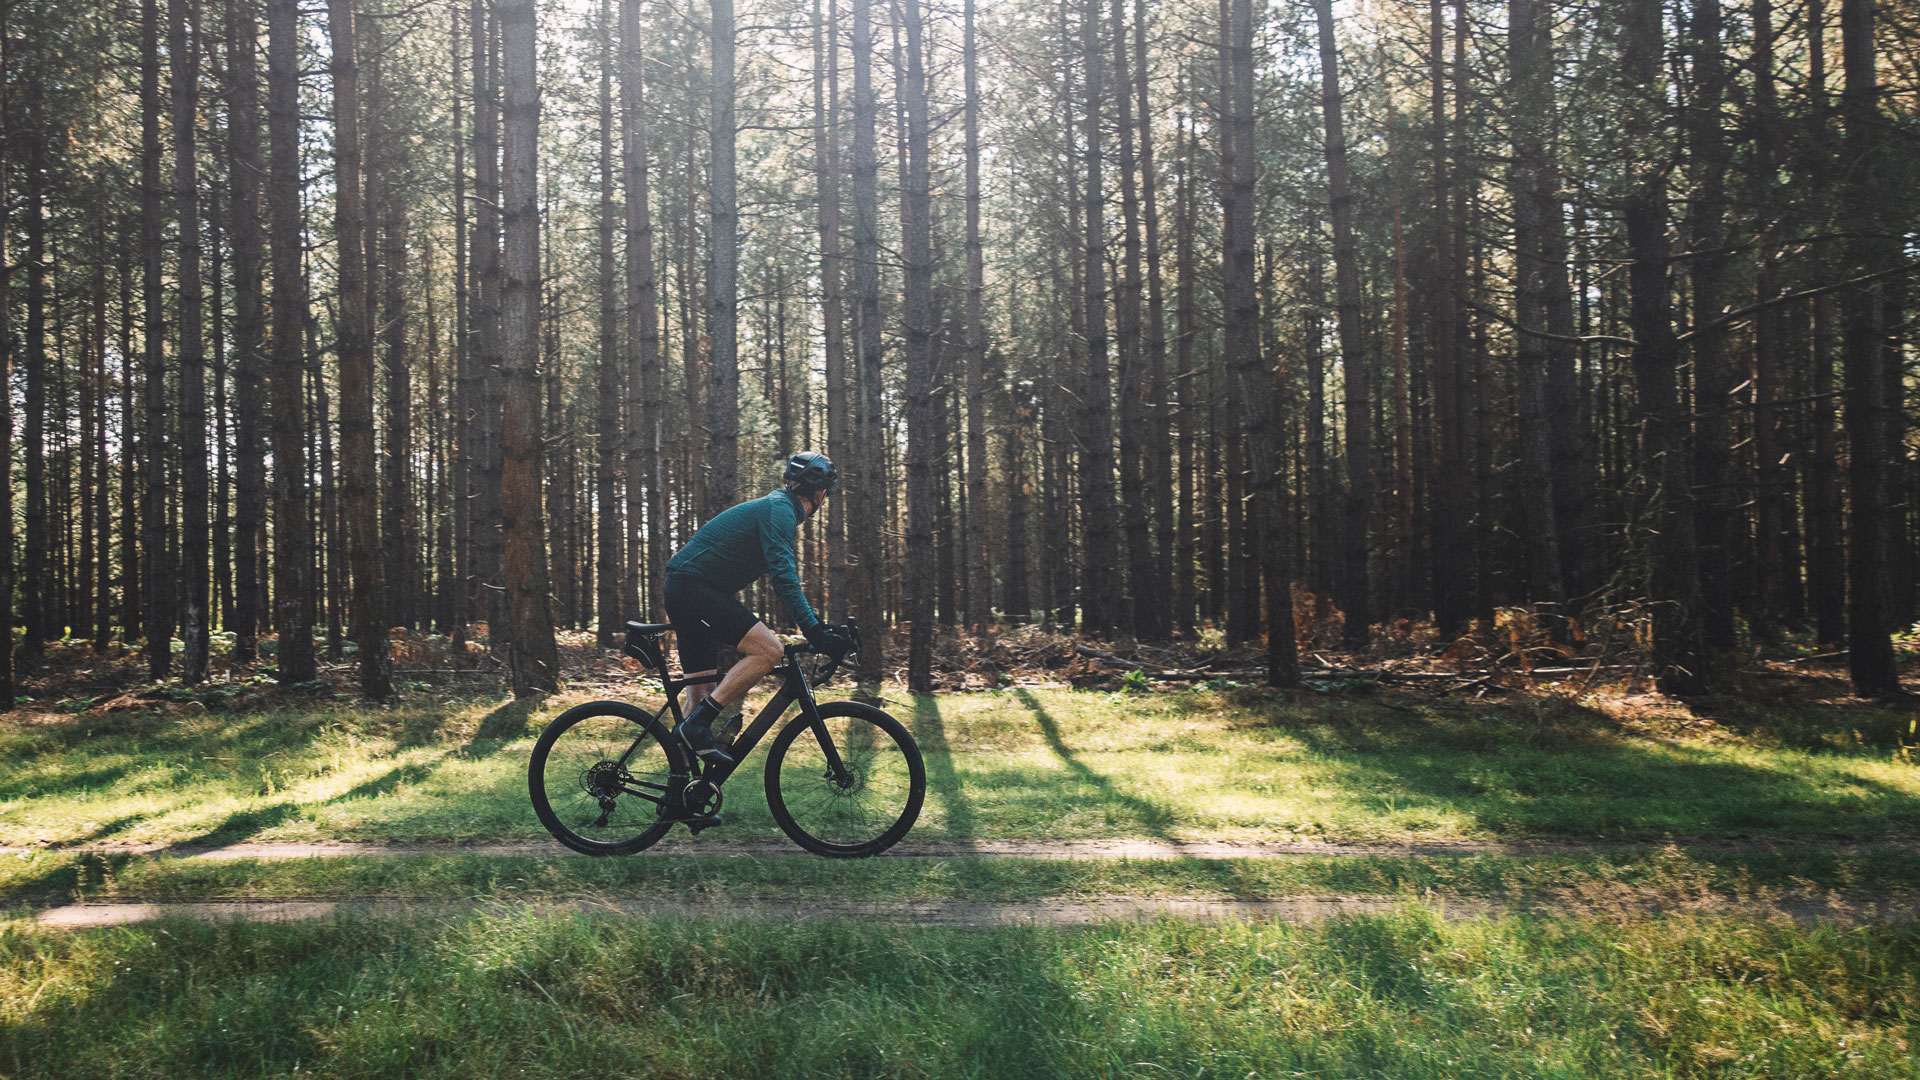 Man riding a bike through a forest